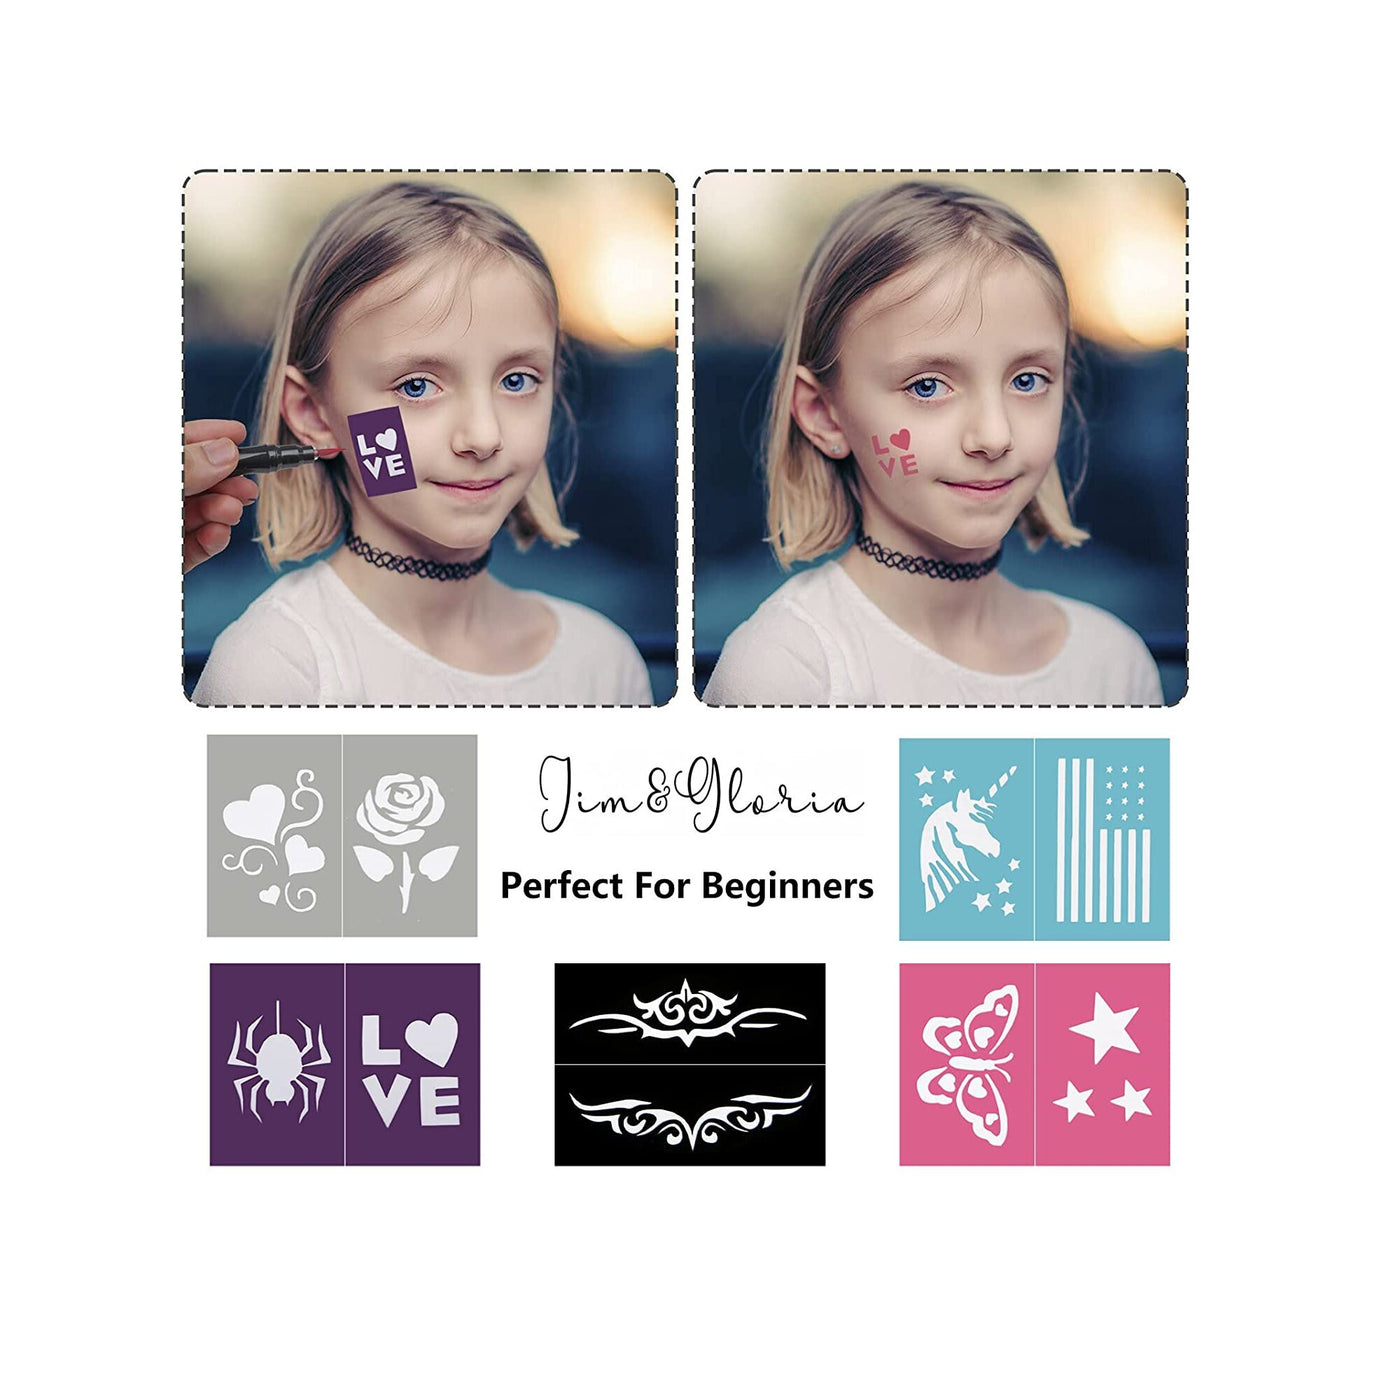 Zenovika Face Paint Kit for Kids - 60 Jumbo Stencils, 15 Large Water Based Paints, 2 Glitters - Halloween Makeup Kit, Professional